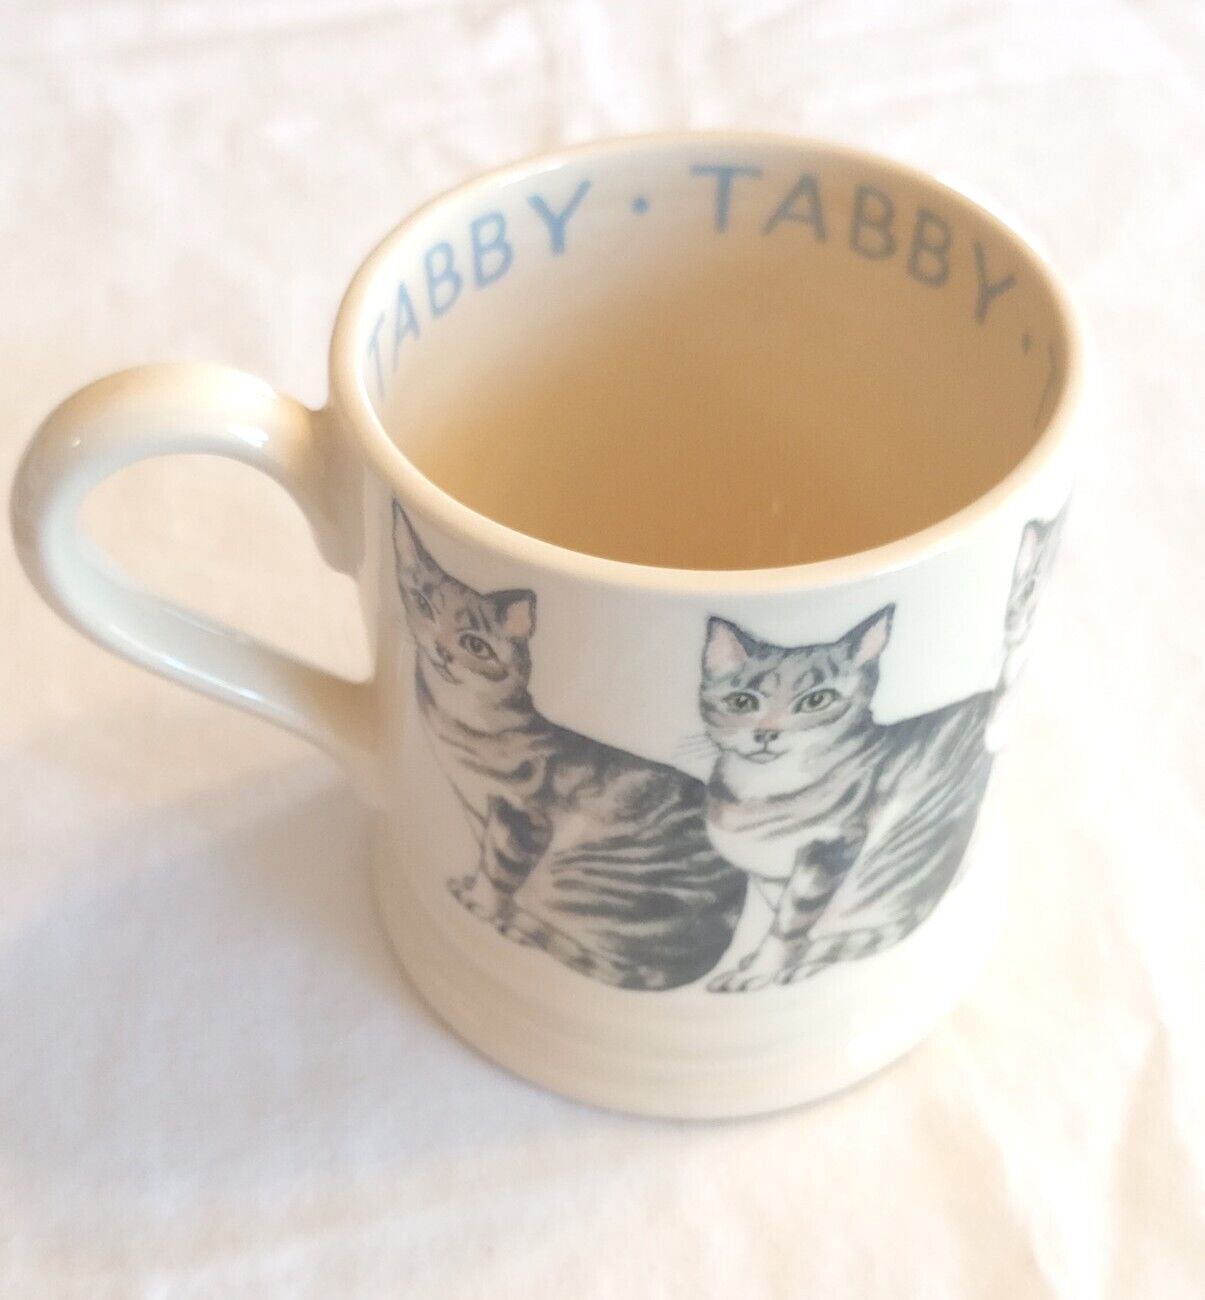 Bridgewater Tabby Cat Coffee Mug Ceramic Cup England